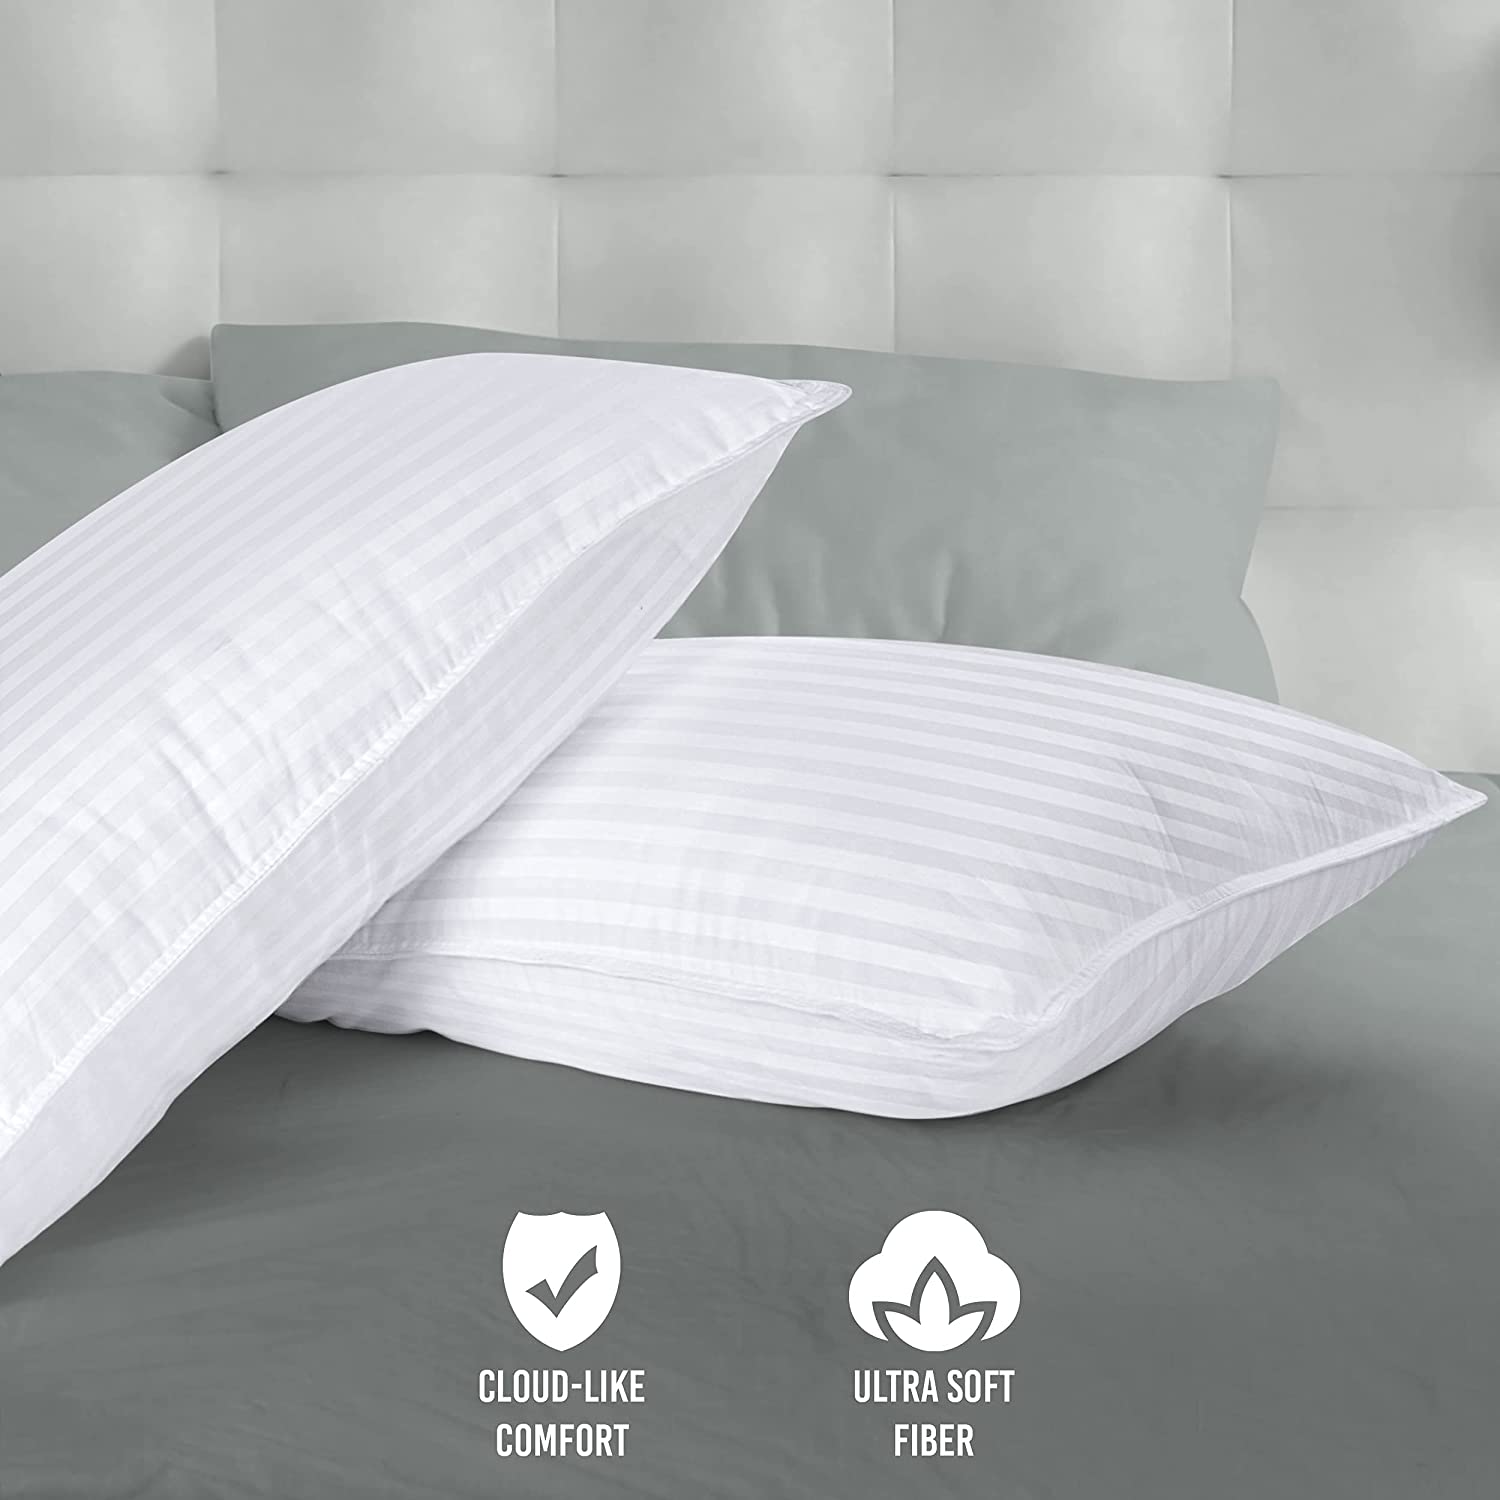 Utopia Bedding Premium Cotton Blanket Queen Plum - Soft Breathable